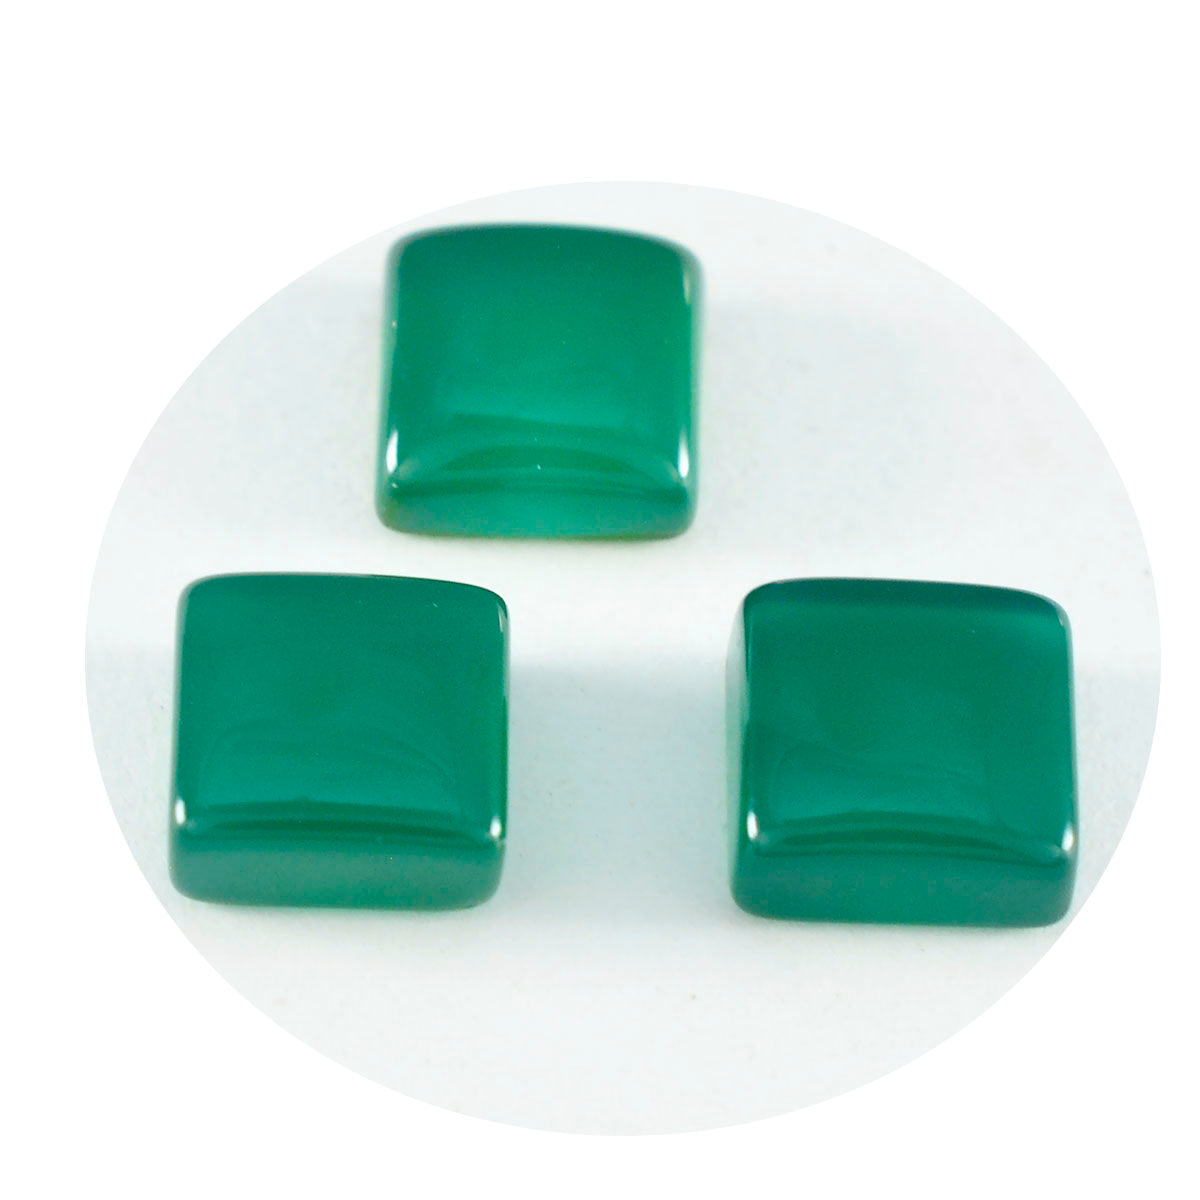 riyogems 1pc グリーン オニキス カボション 13x13 mm 正方形の形の見栄えの良い品質のルース宝石